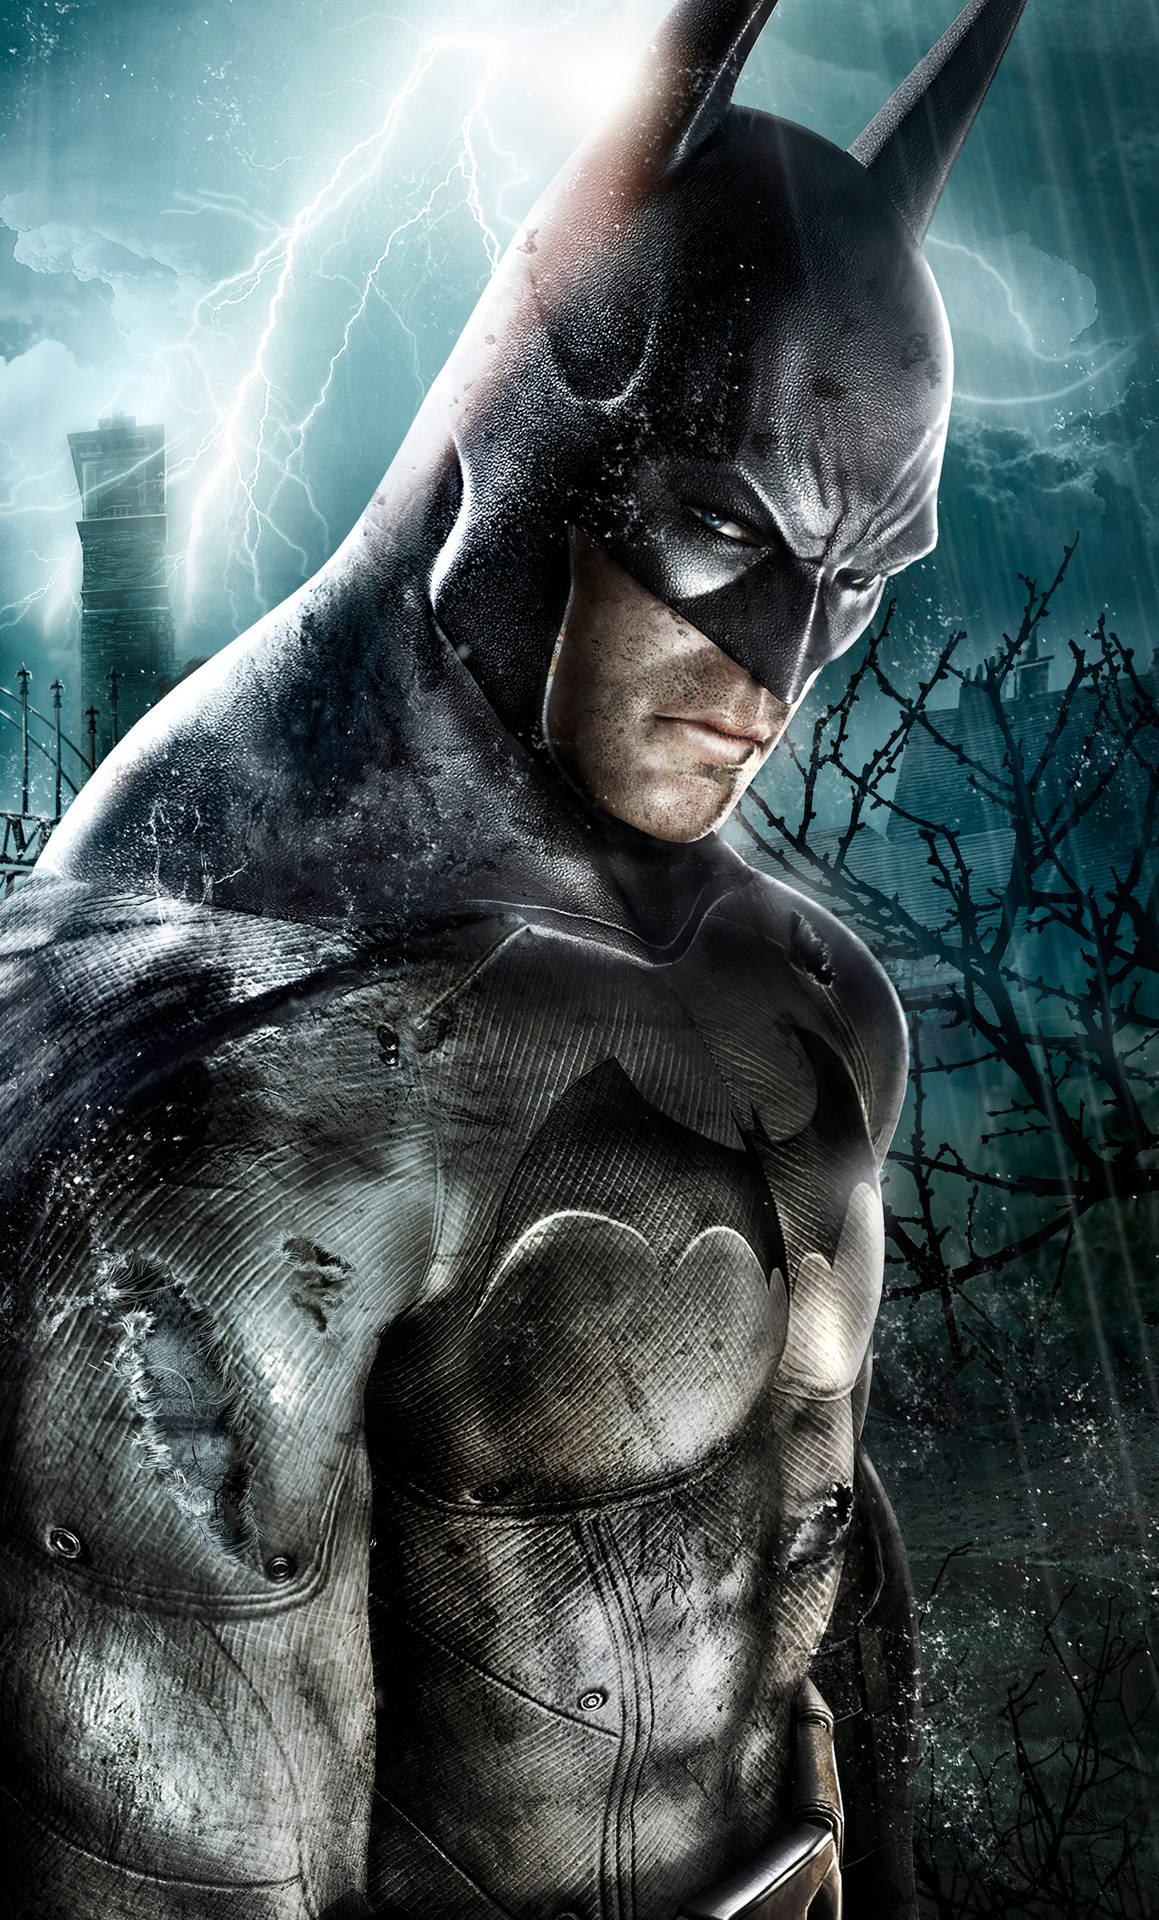 Batmanarkham Iphone Asylum: Batman Arkham Iphone Asylum Wallpaper